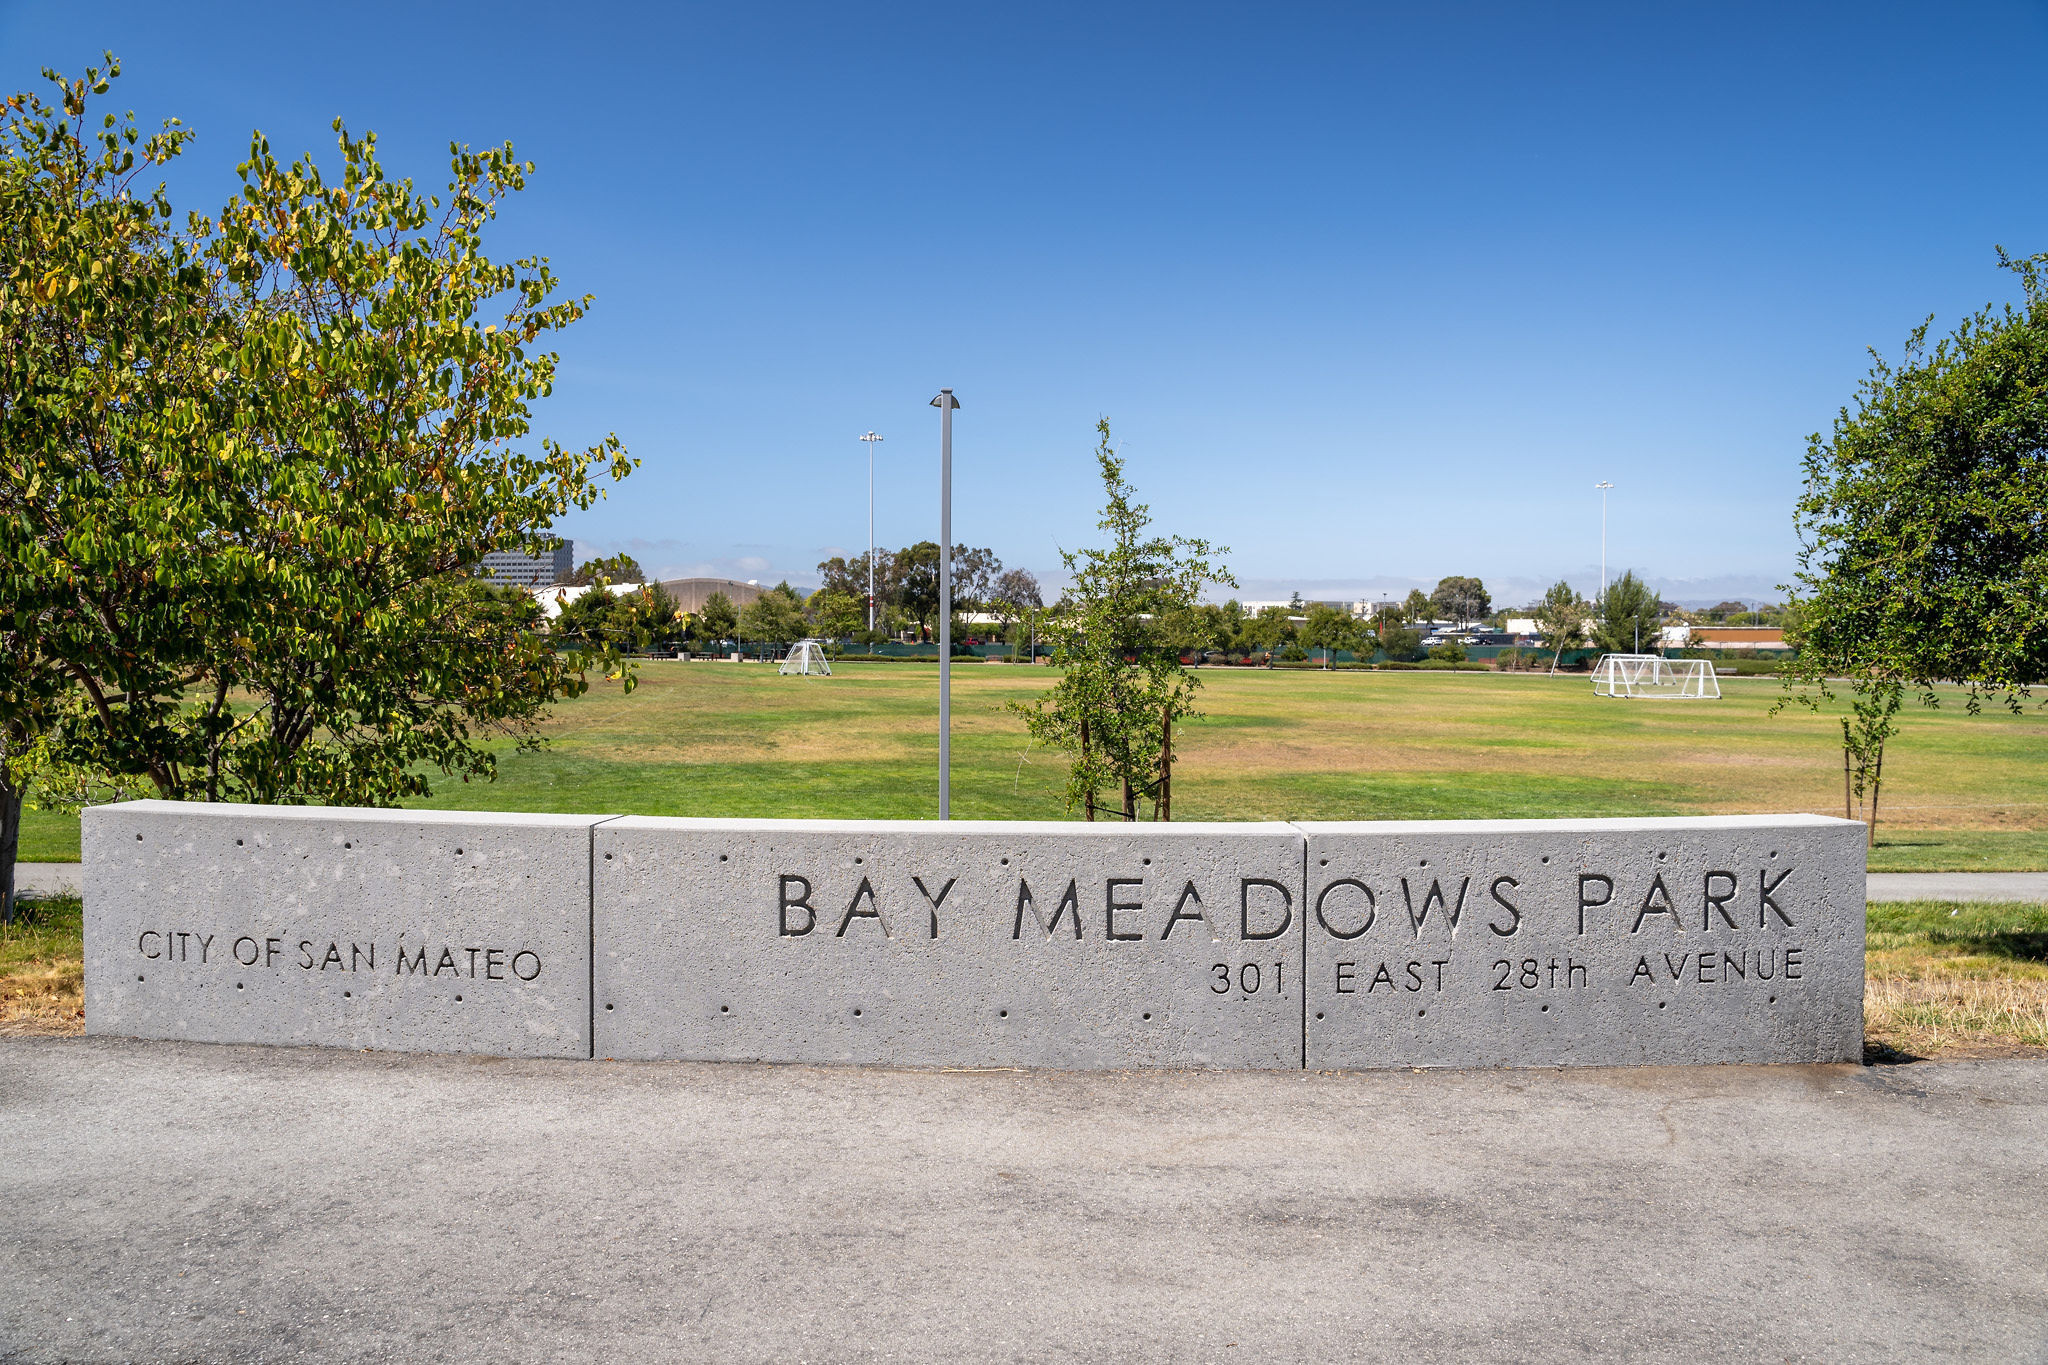 Bay Meadows/Fiesta Gardens Bay Meadows Park soccer field in San Mateo.